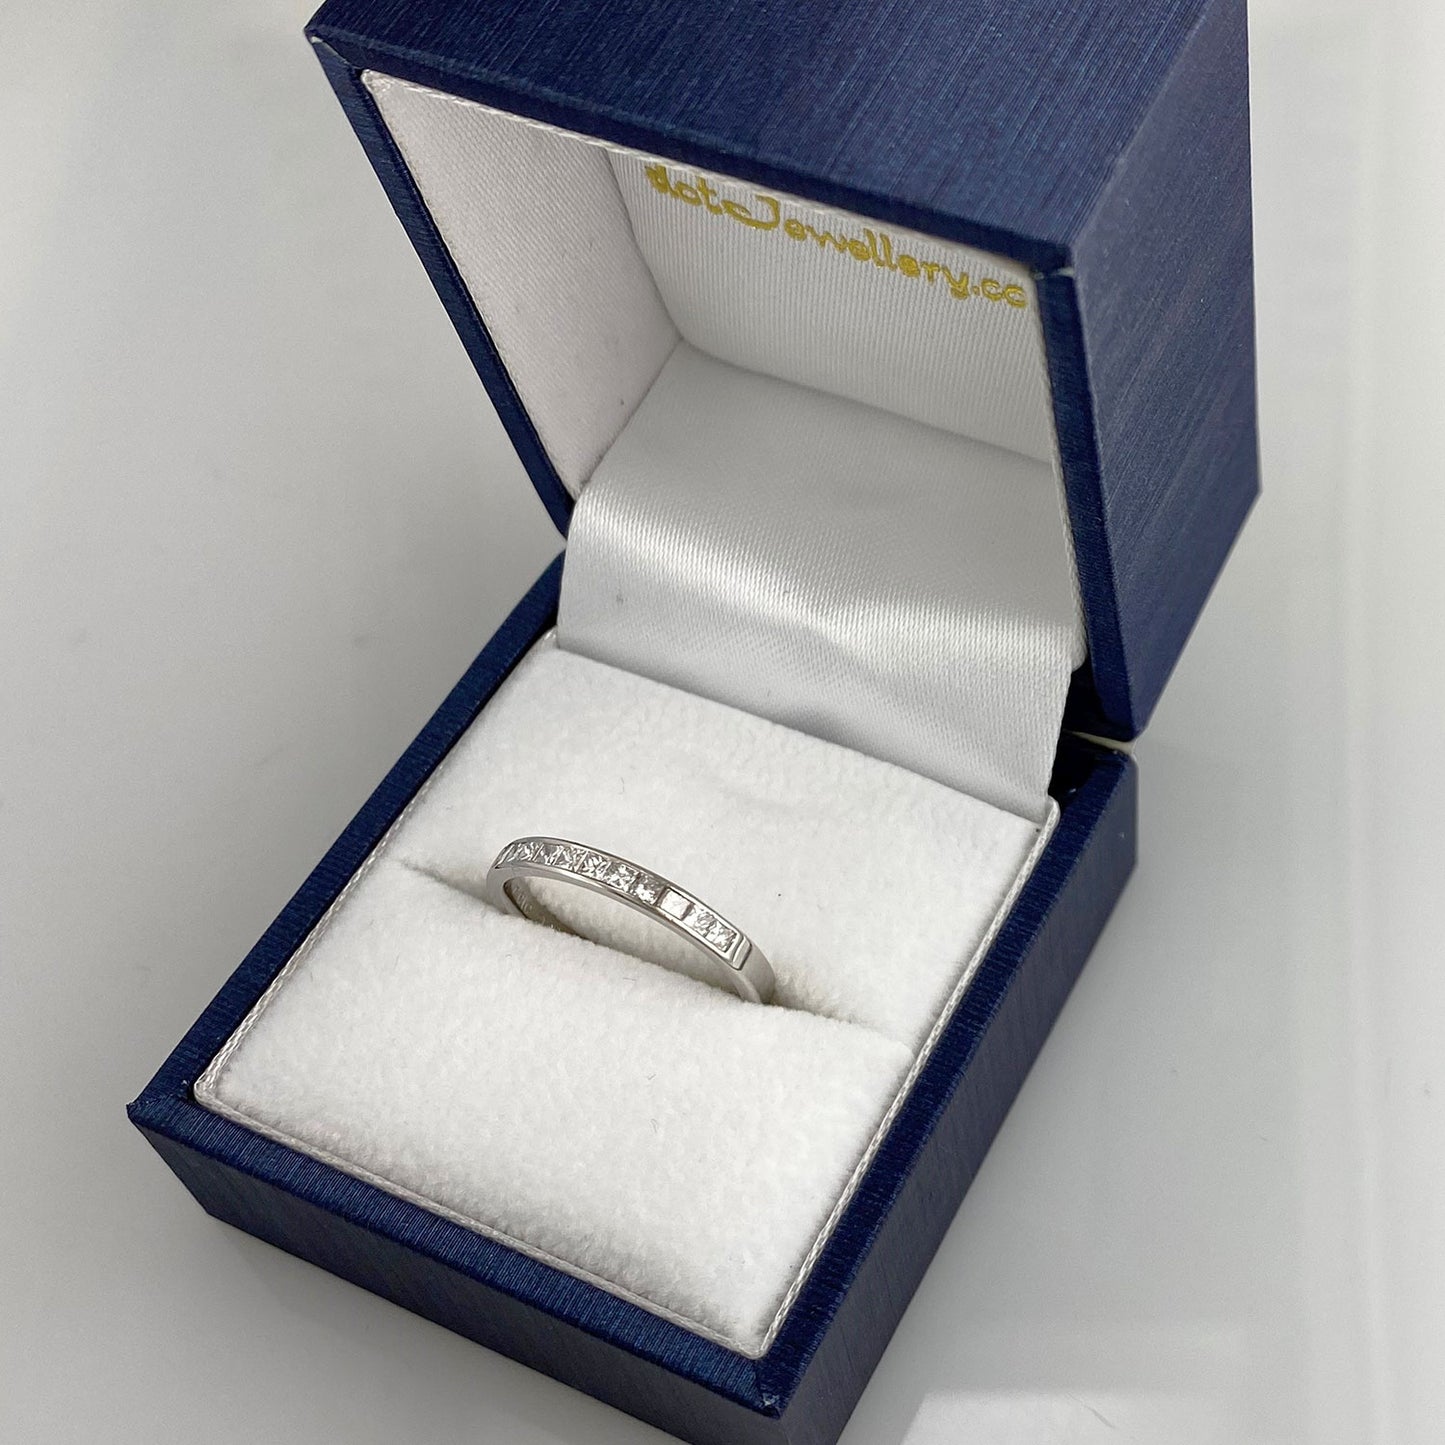 Channel Set Diamond 950 Platinum 2.5mm Wedding Ring